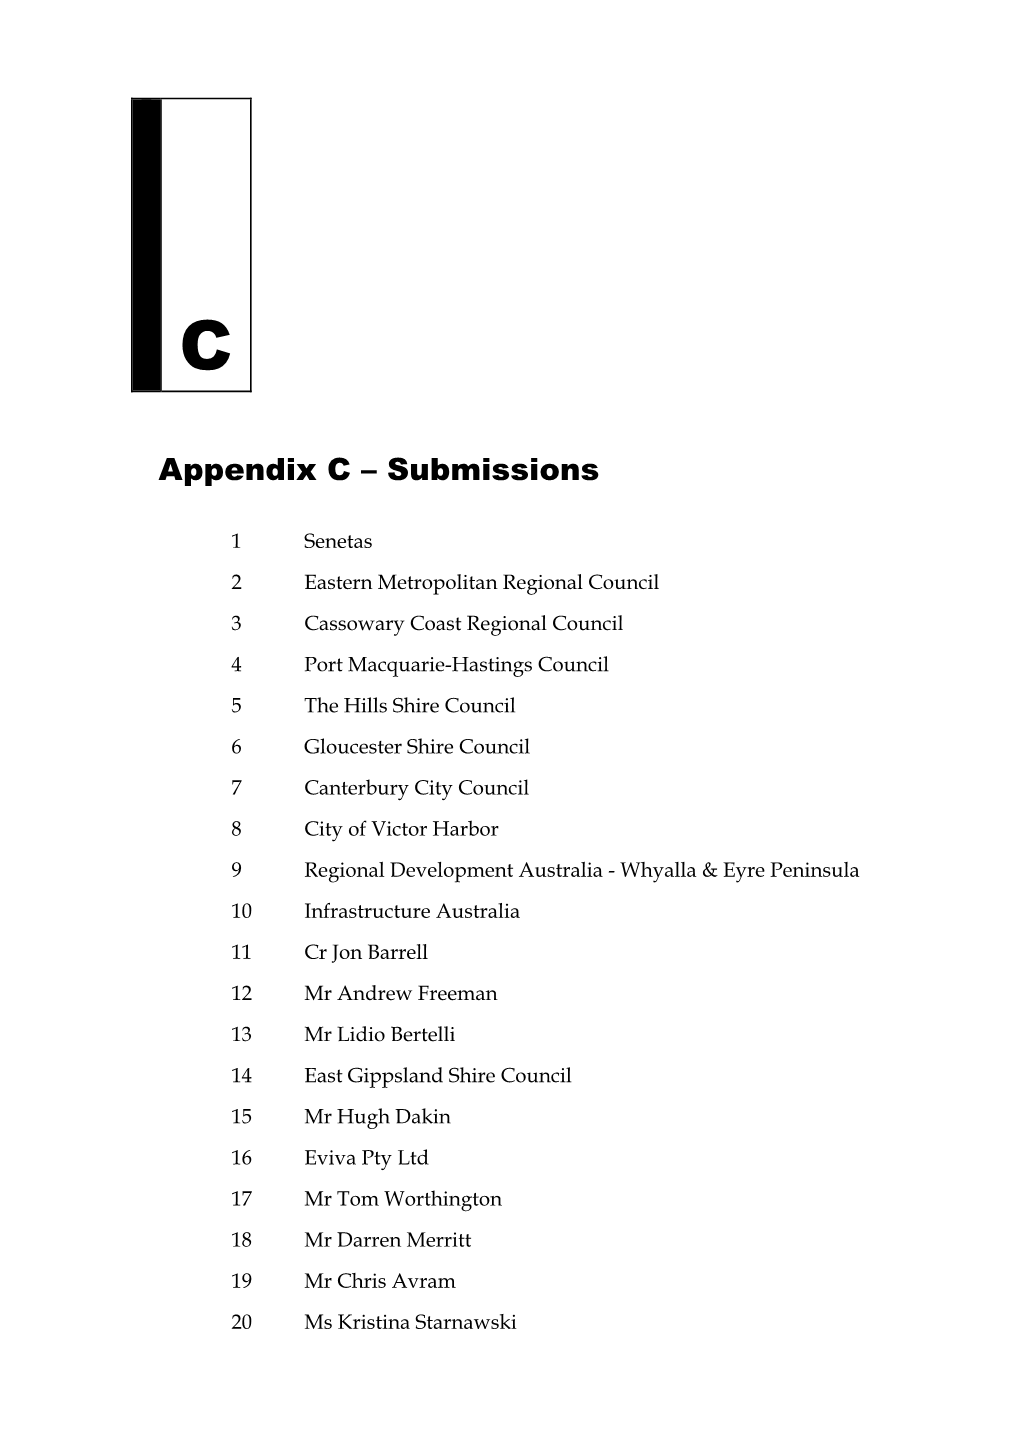 Appendix C: Submissions